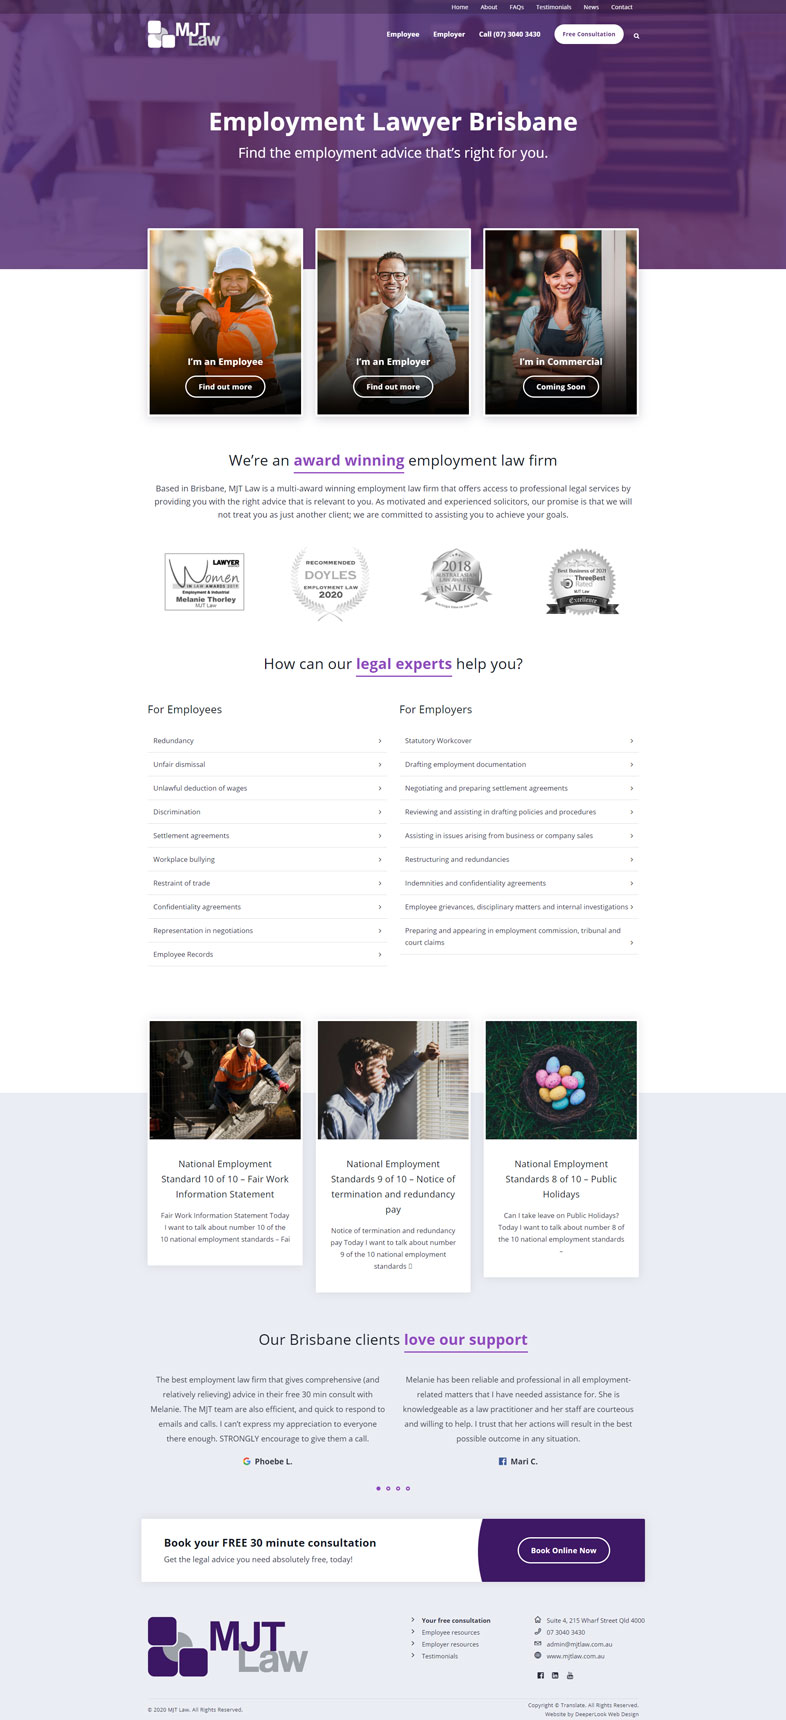 Mjt law's website design of the homepage